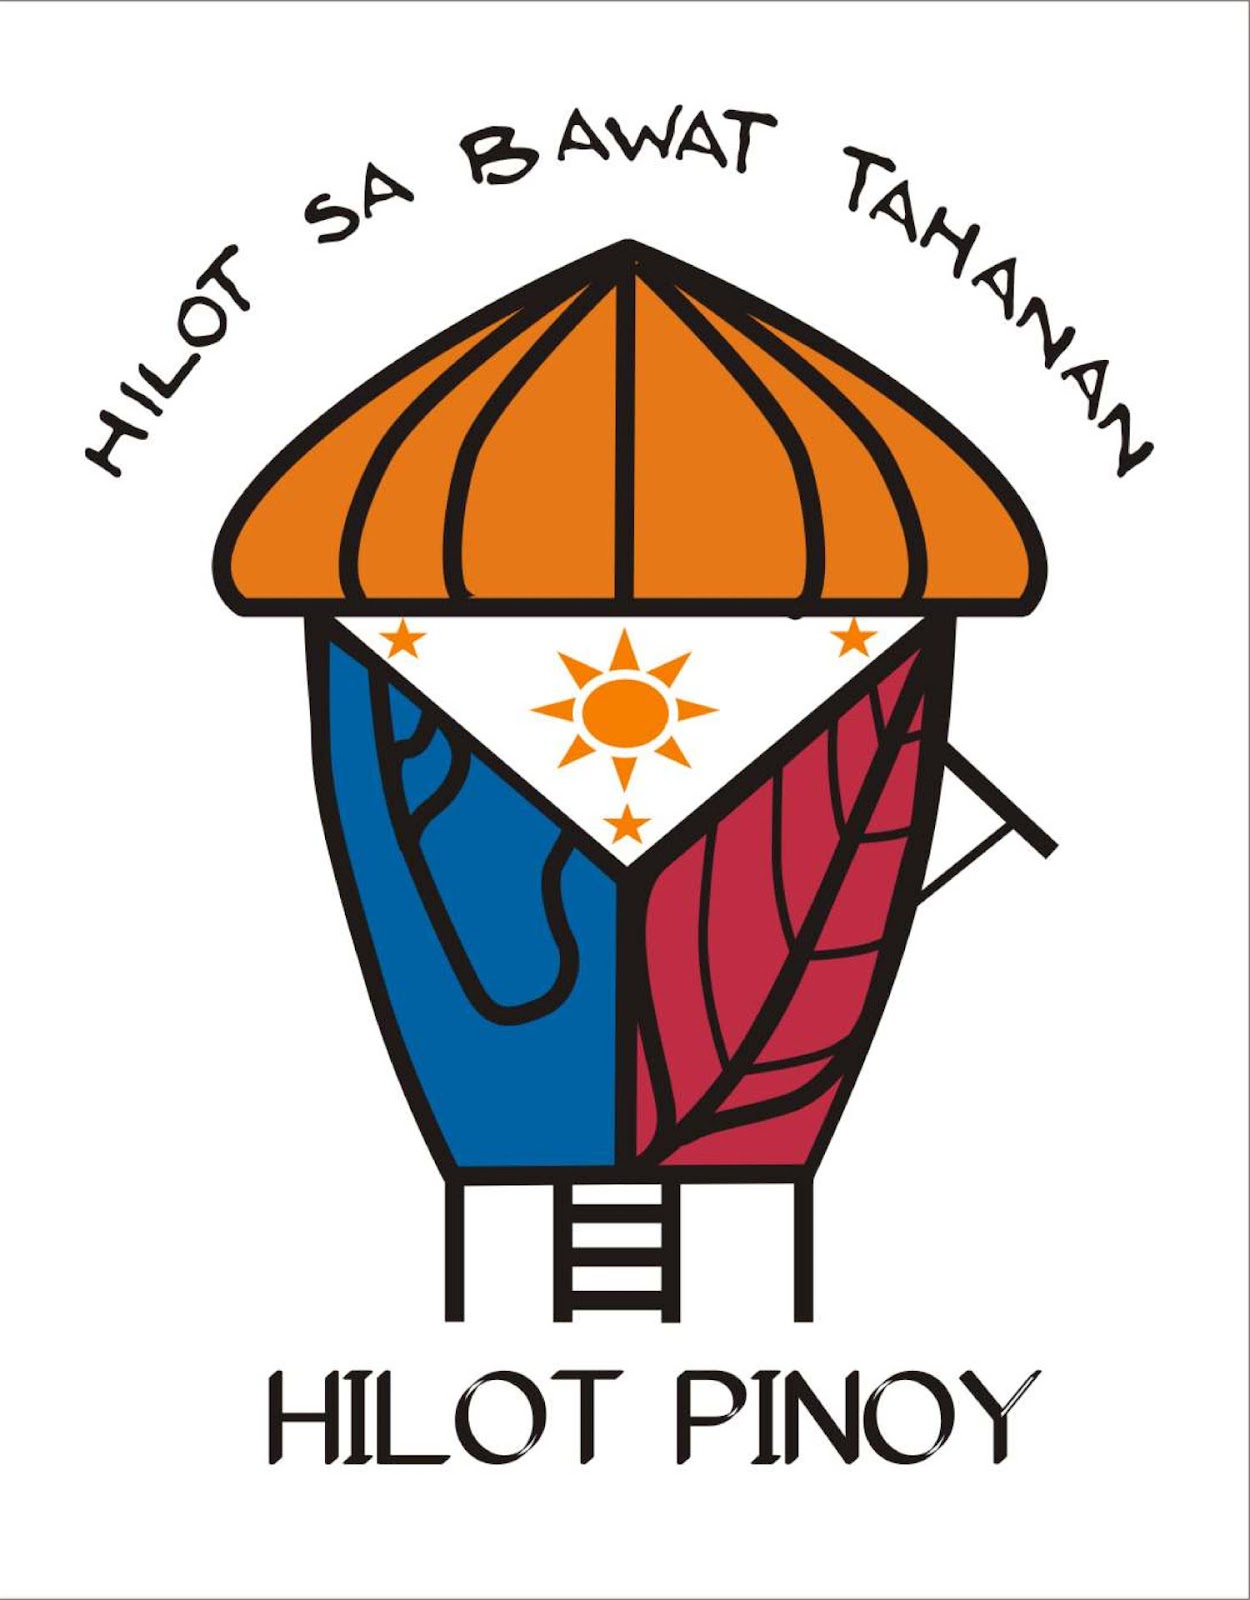 Hilot Pinoy